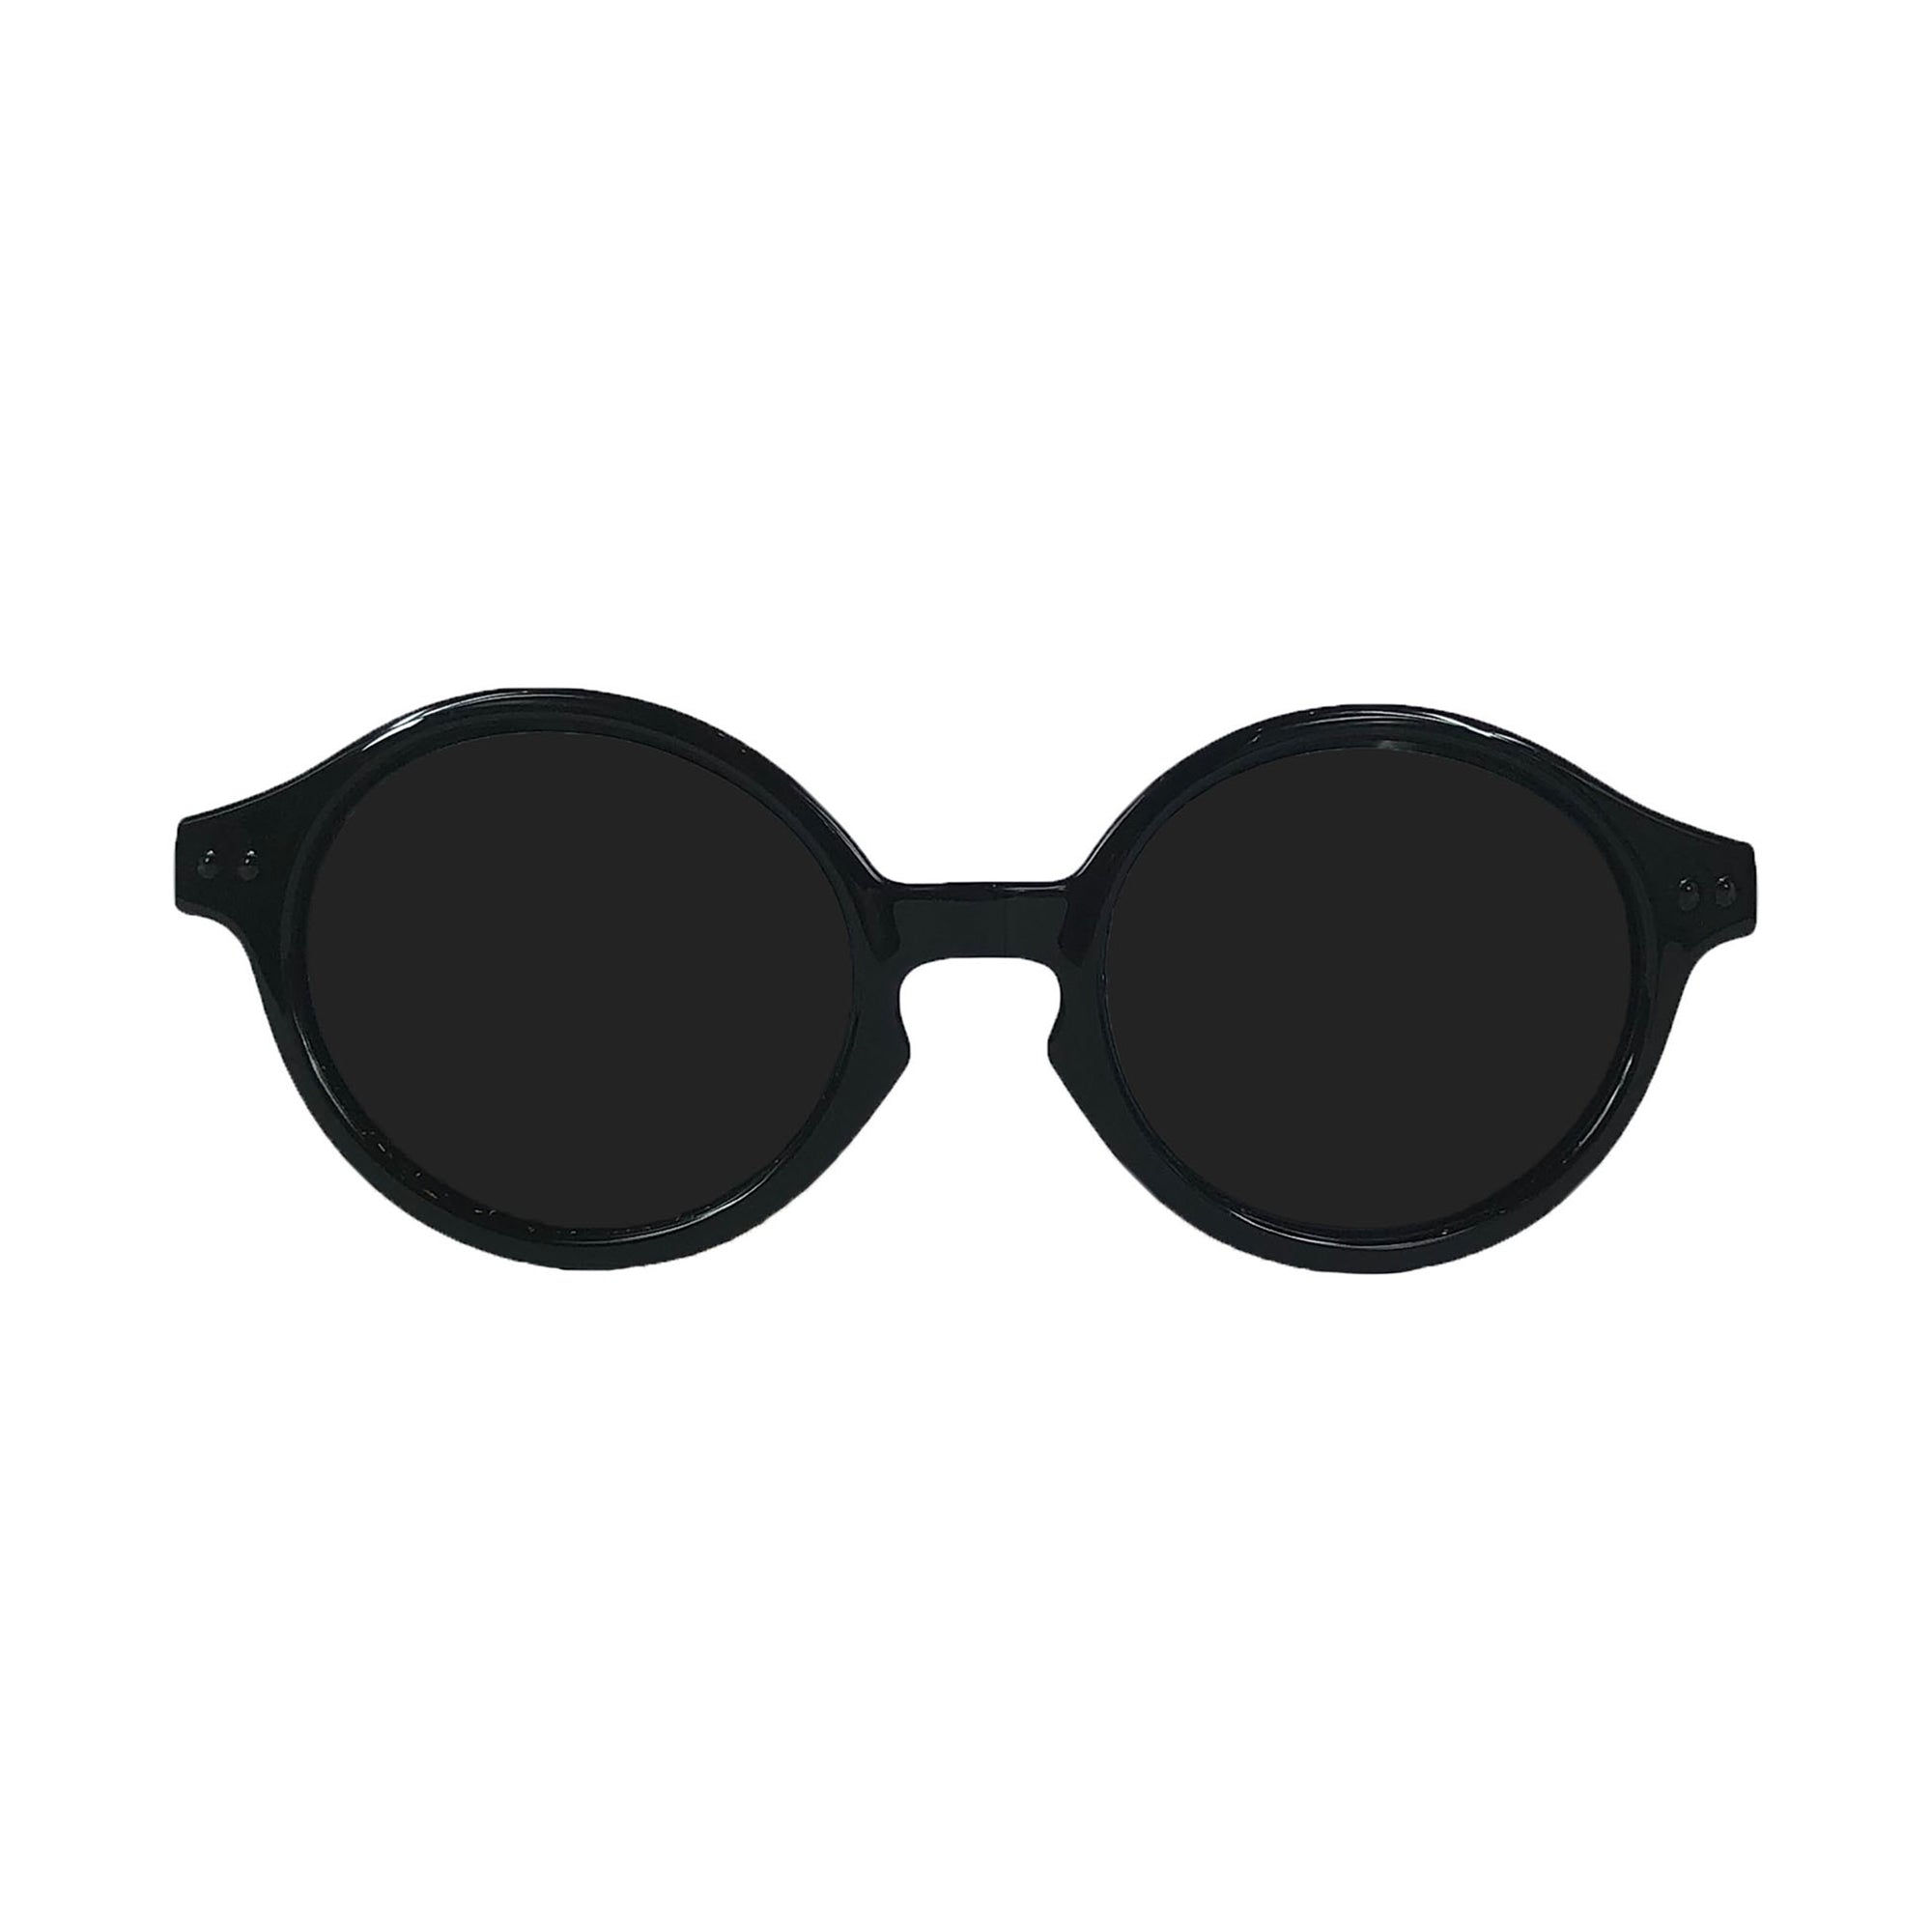 Sunglasses - Babyfied Apparel 400UV